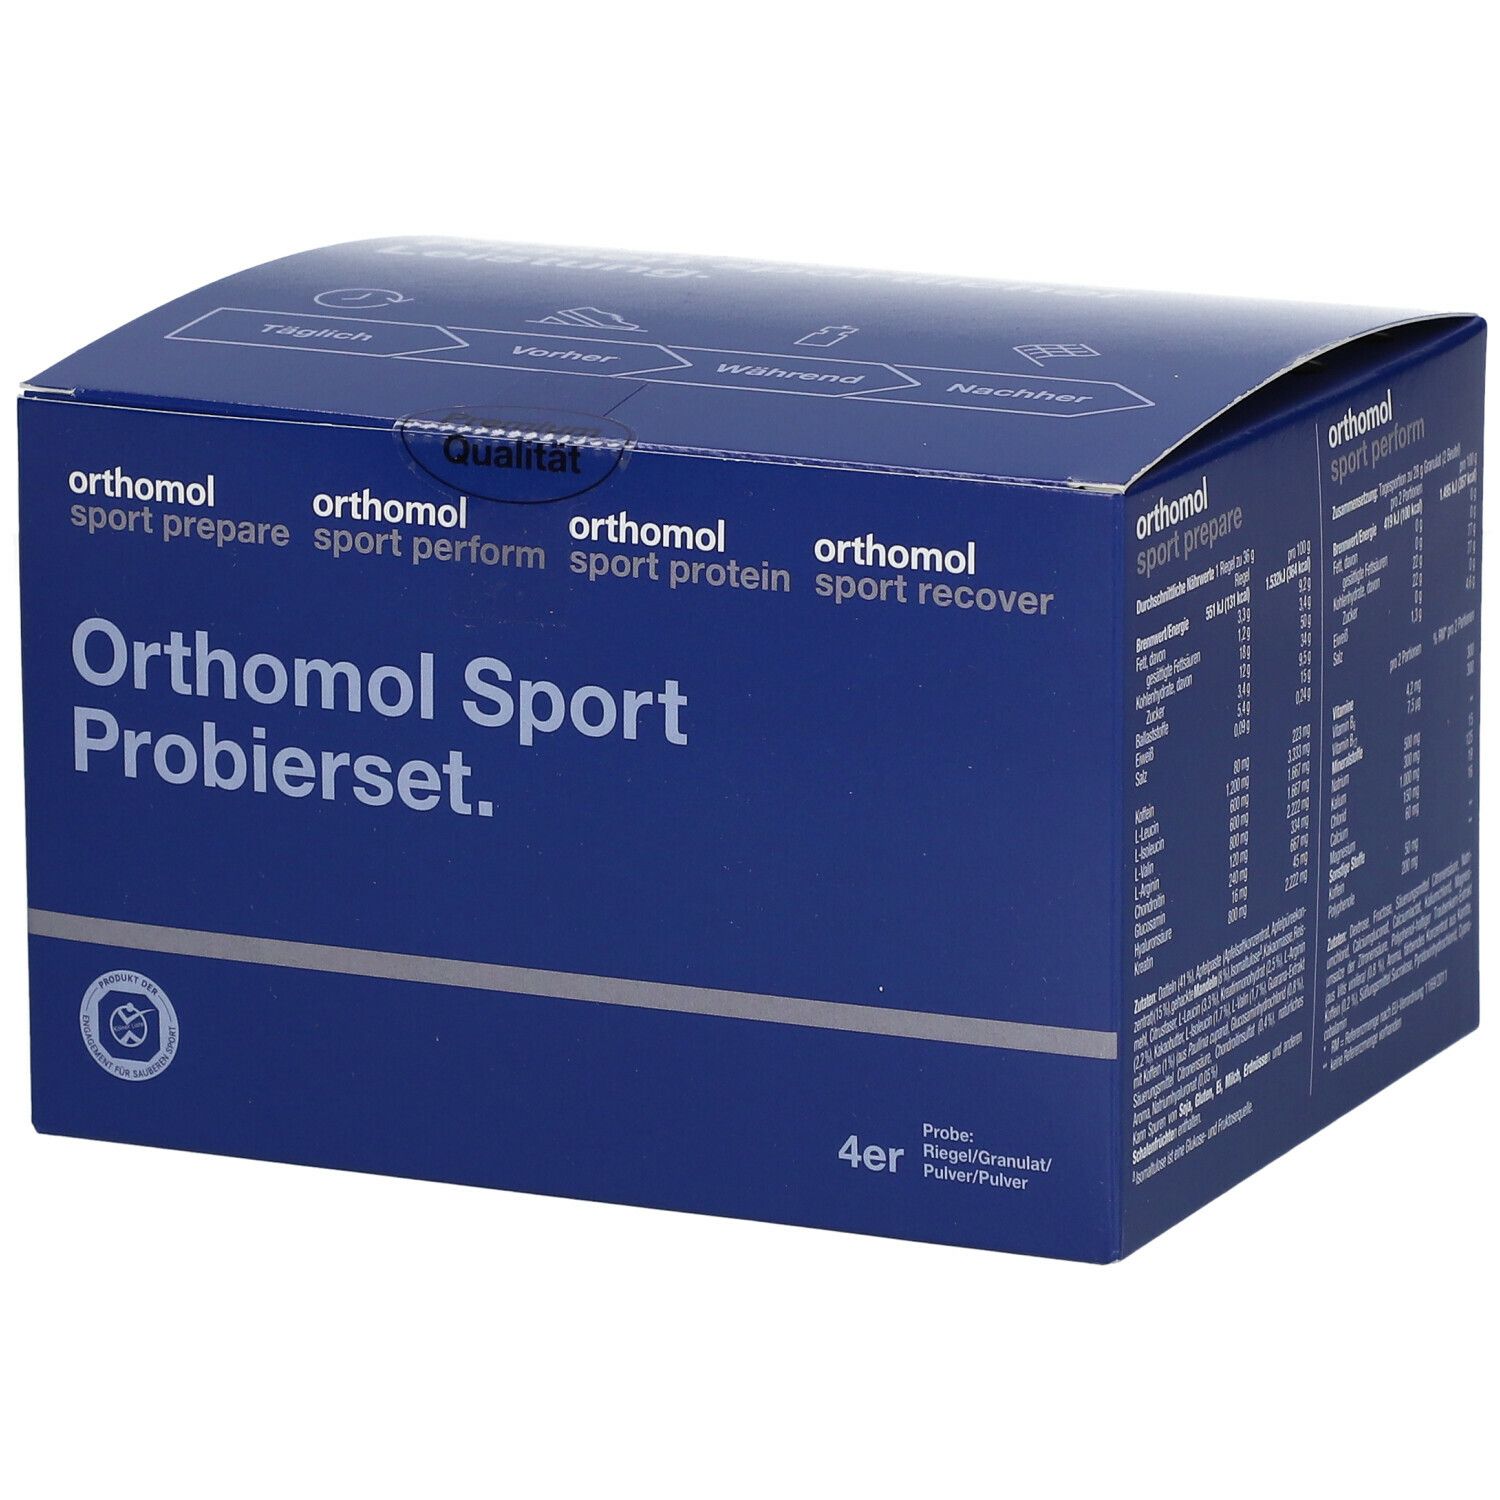 Image of Orthomol Sport Probierpaket